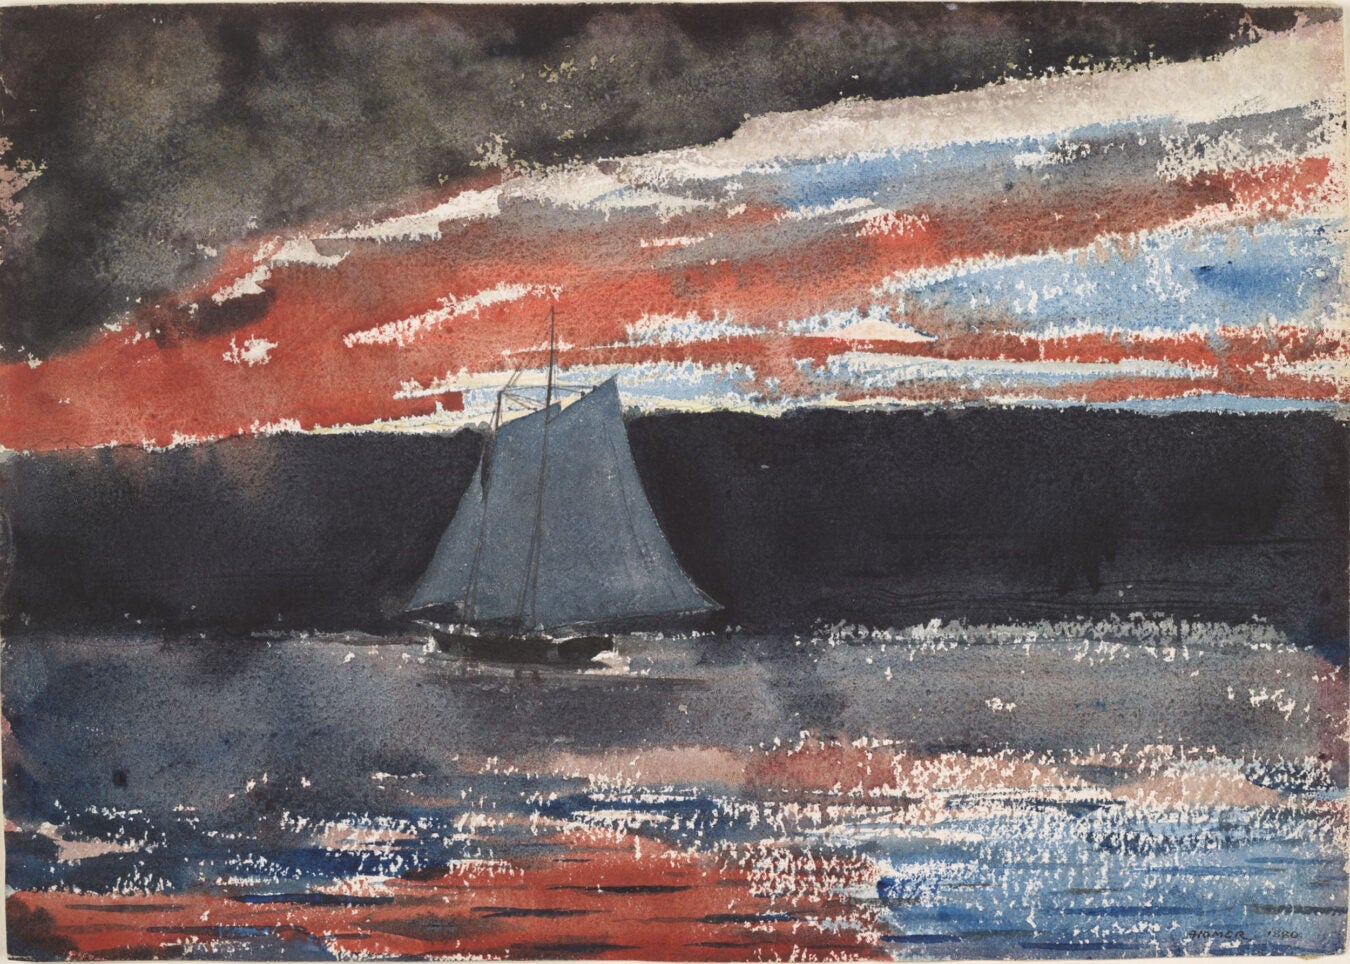 "Schooner at Sunset" by Winslow Homer.